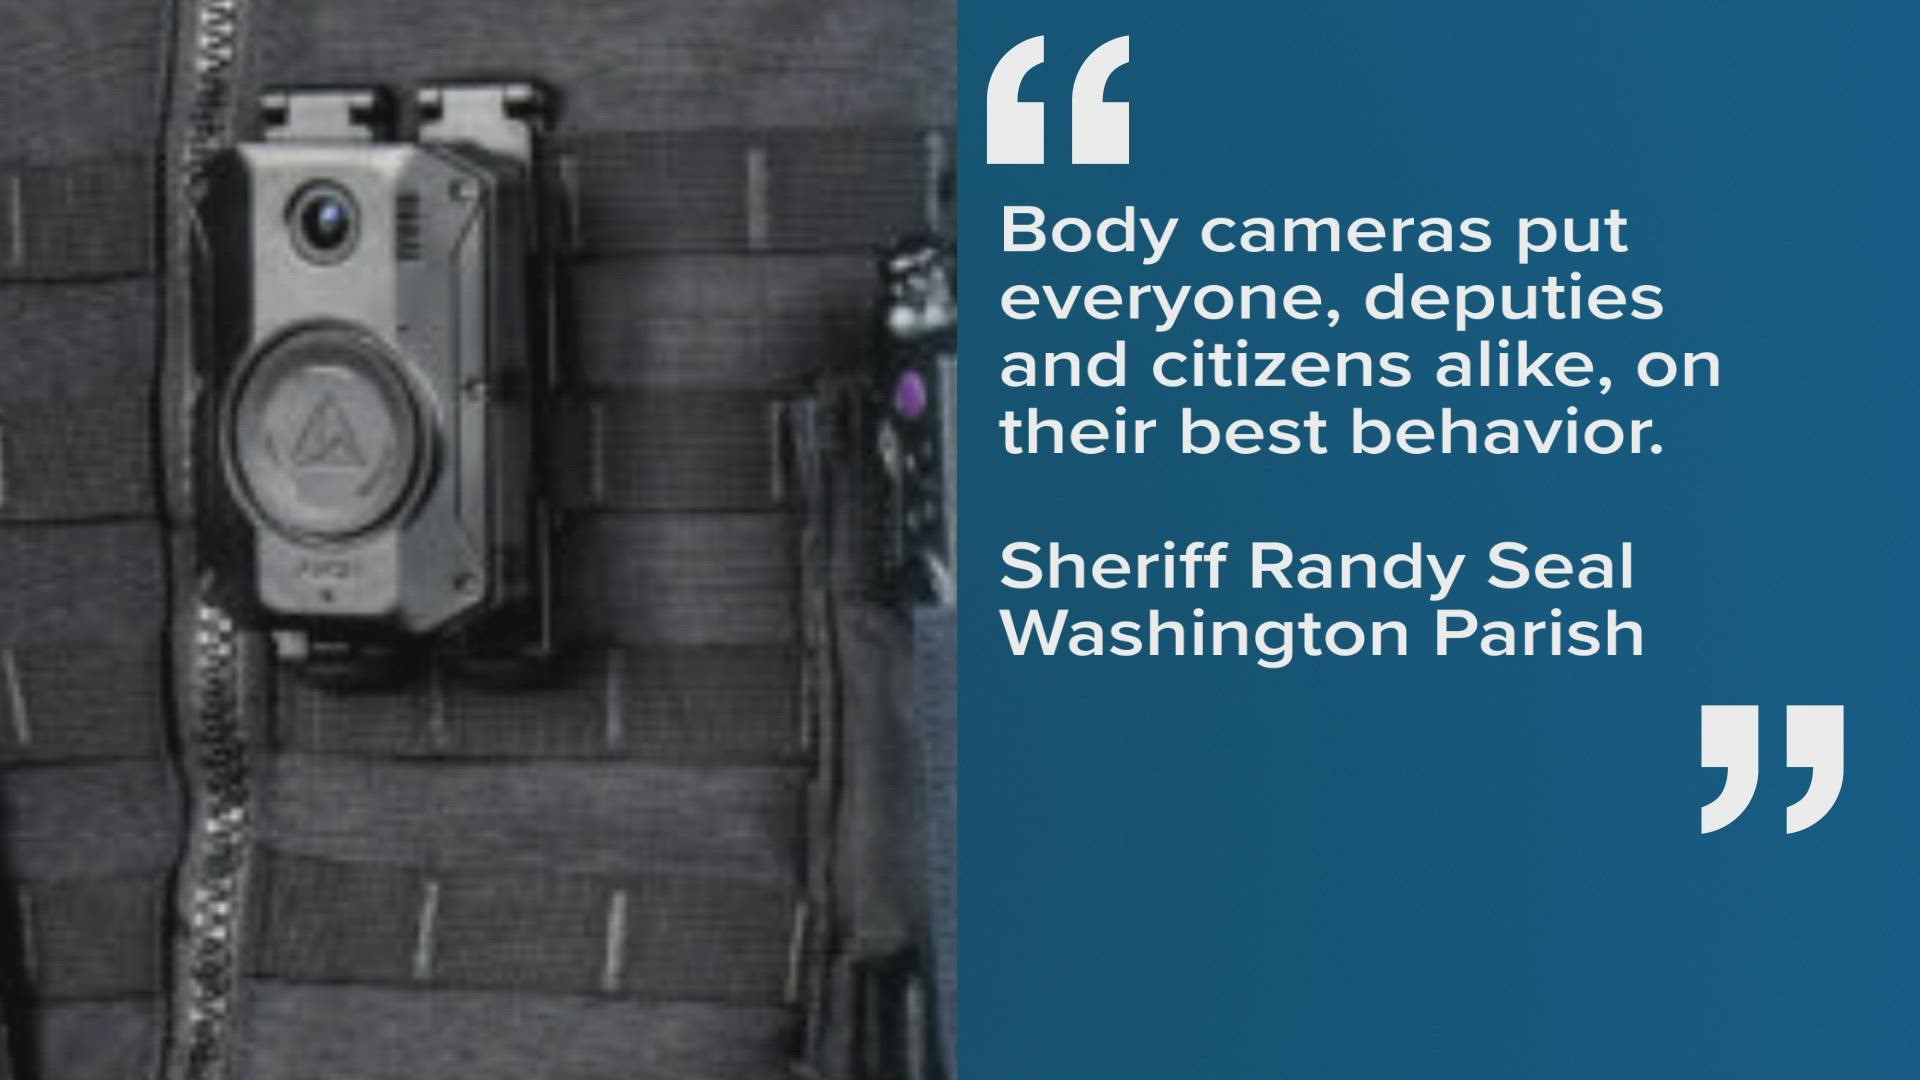 " Body cameras put everyone, deputies and citizens alike, on their best behavior, " said Sheriff Randy Seal